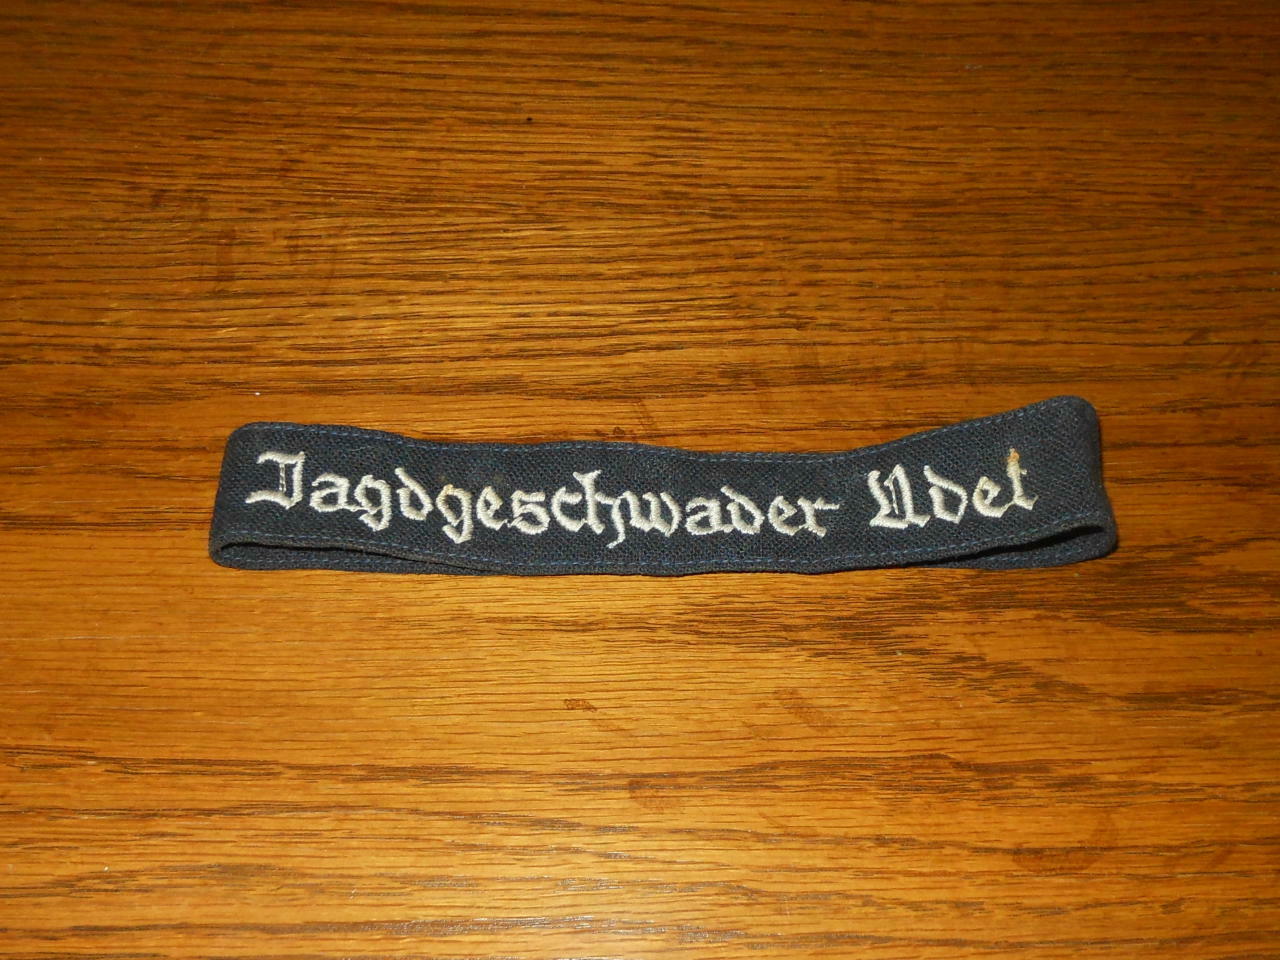 German Luftwaffe Jagdgeschwader UDET Cuff title Wool Blue 